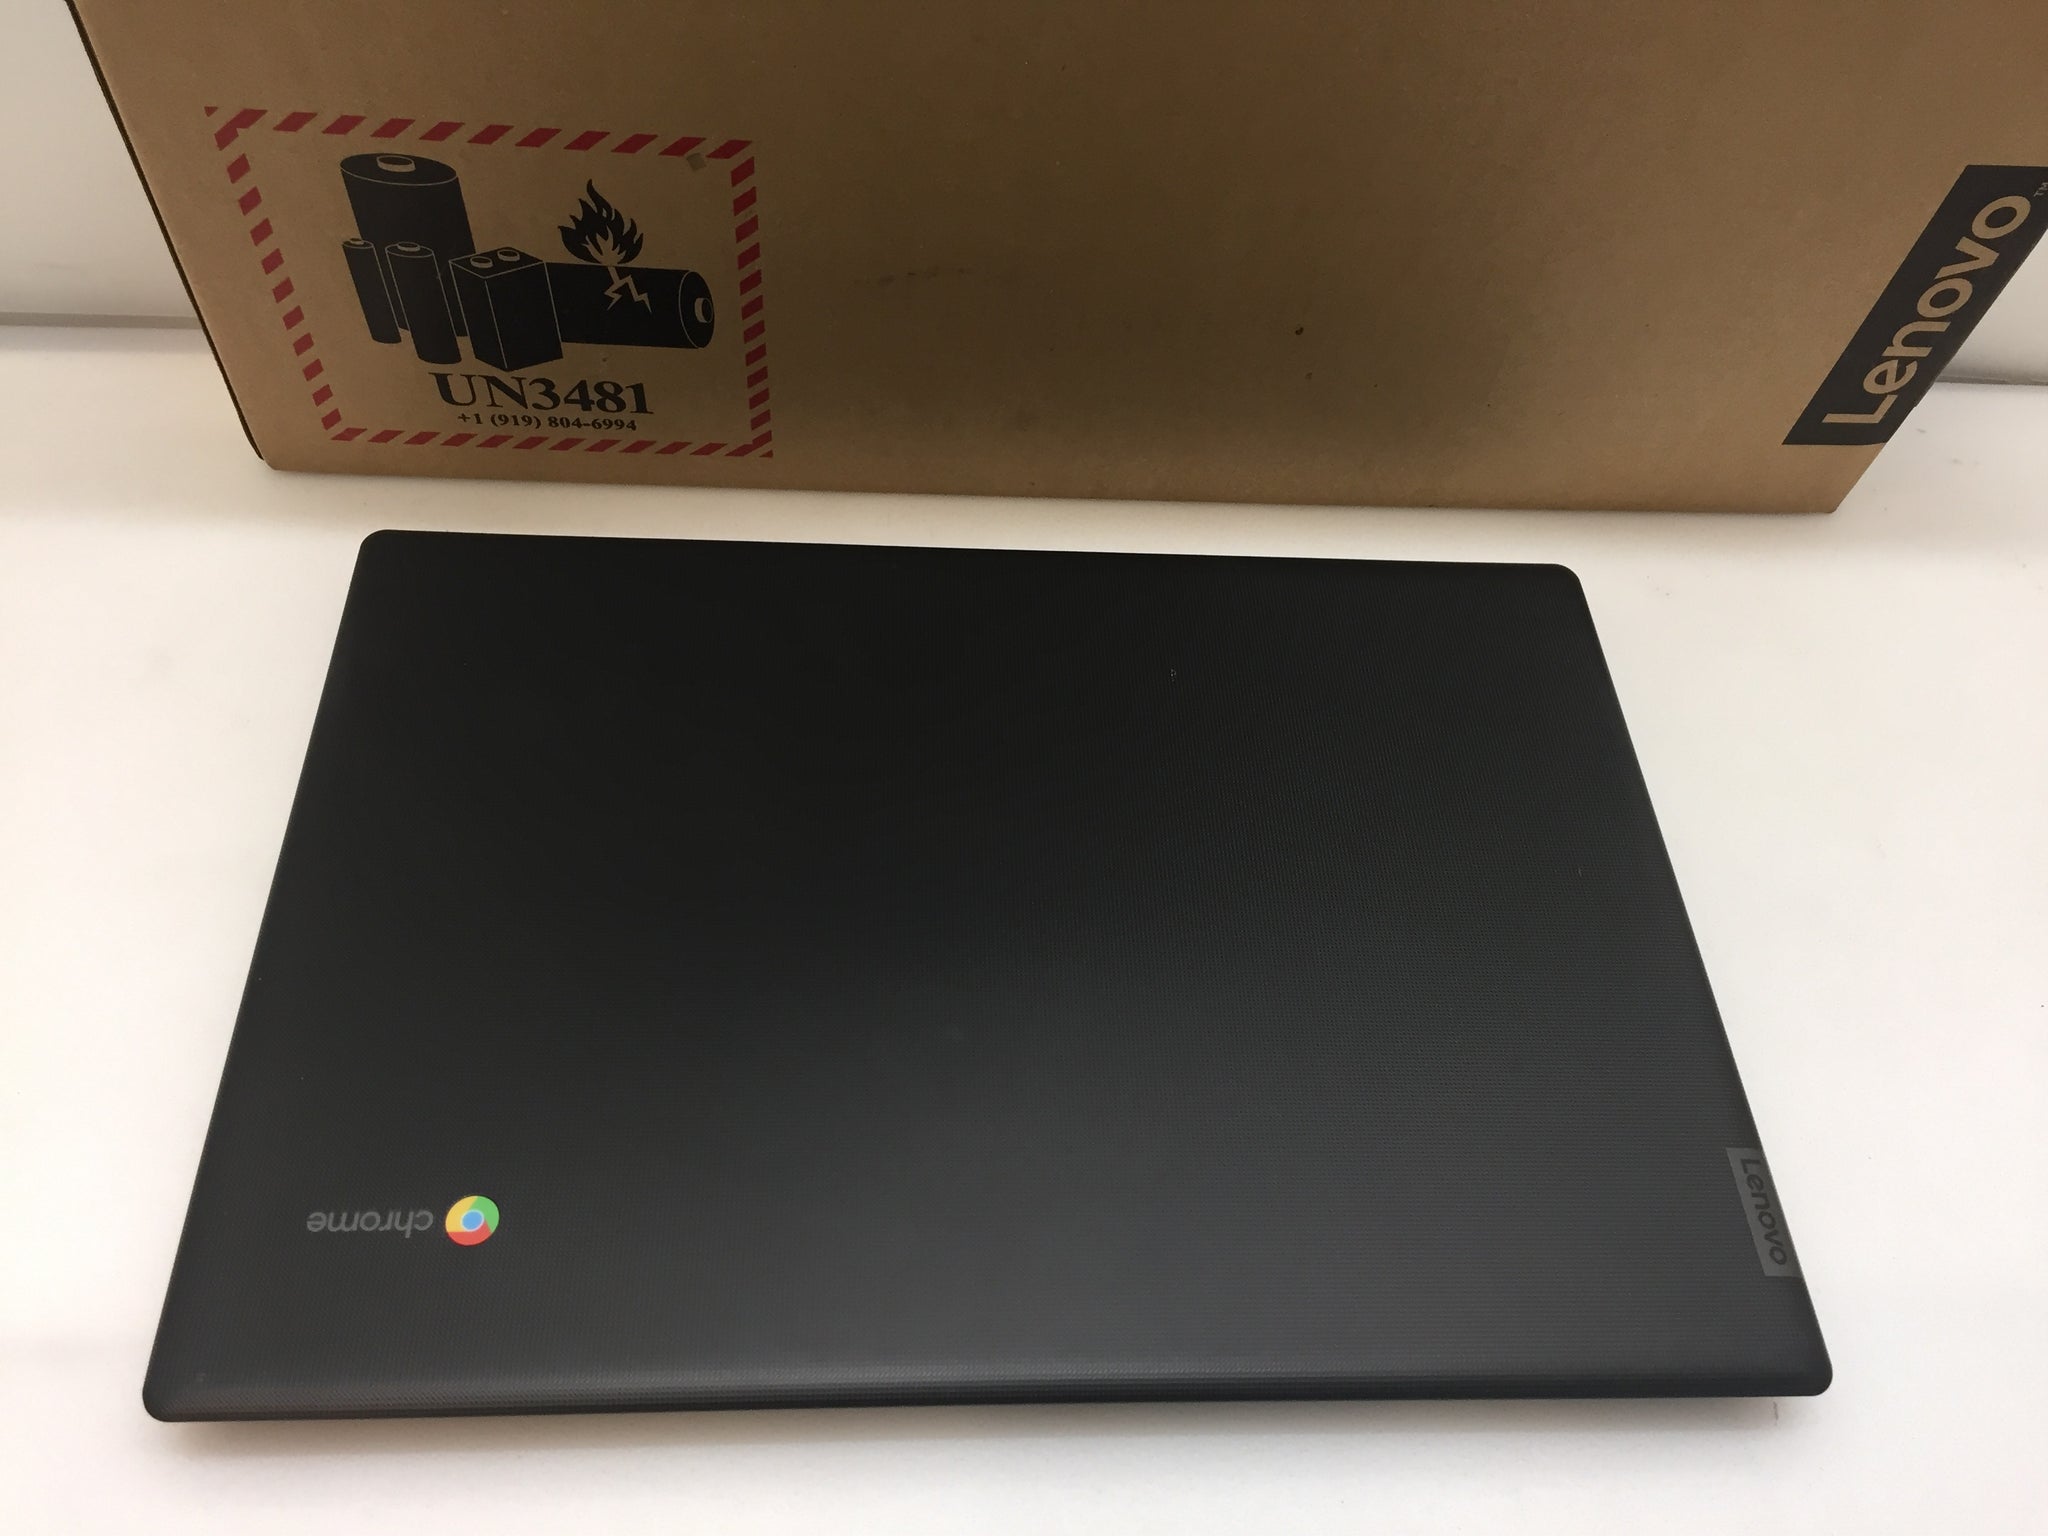 Lenovo Chromebook S330 14 inch (32 GB eMMC, Mediatek MT8173c, 2.10 GHz, 4  GB) Laptop - 81JW0001US for sale online